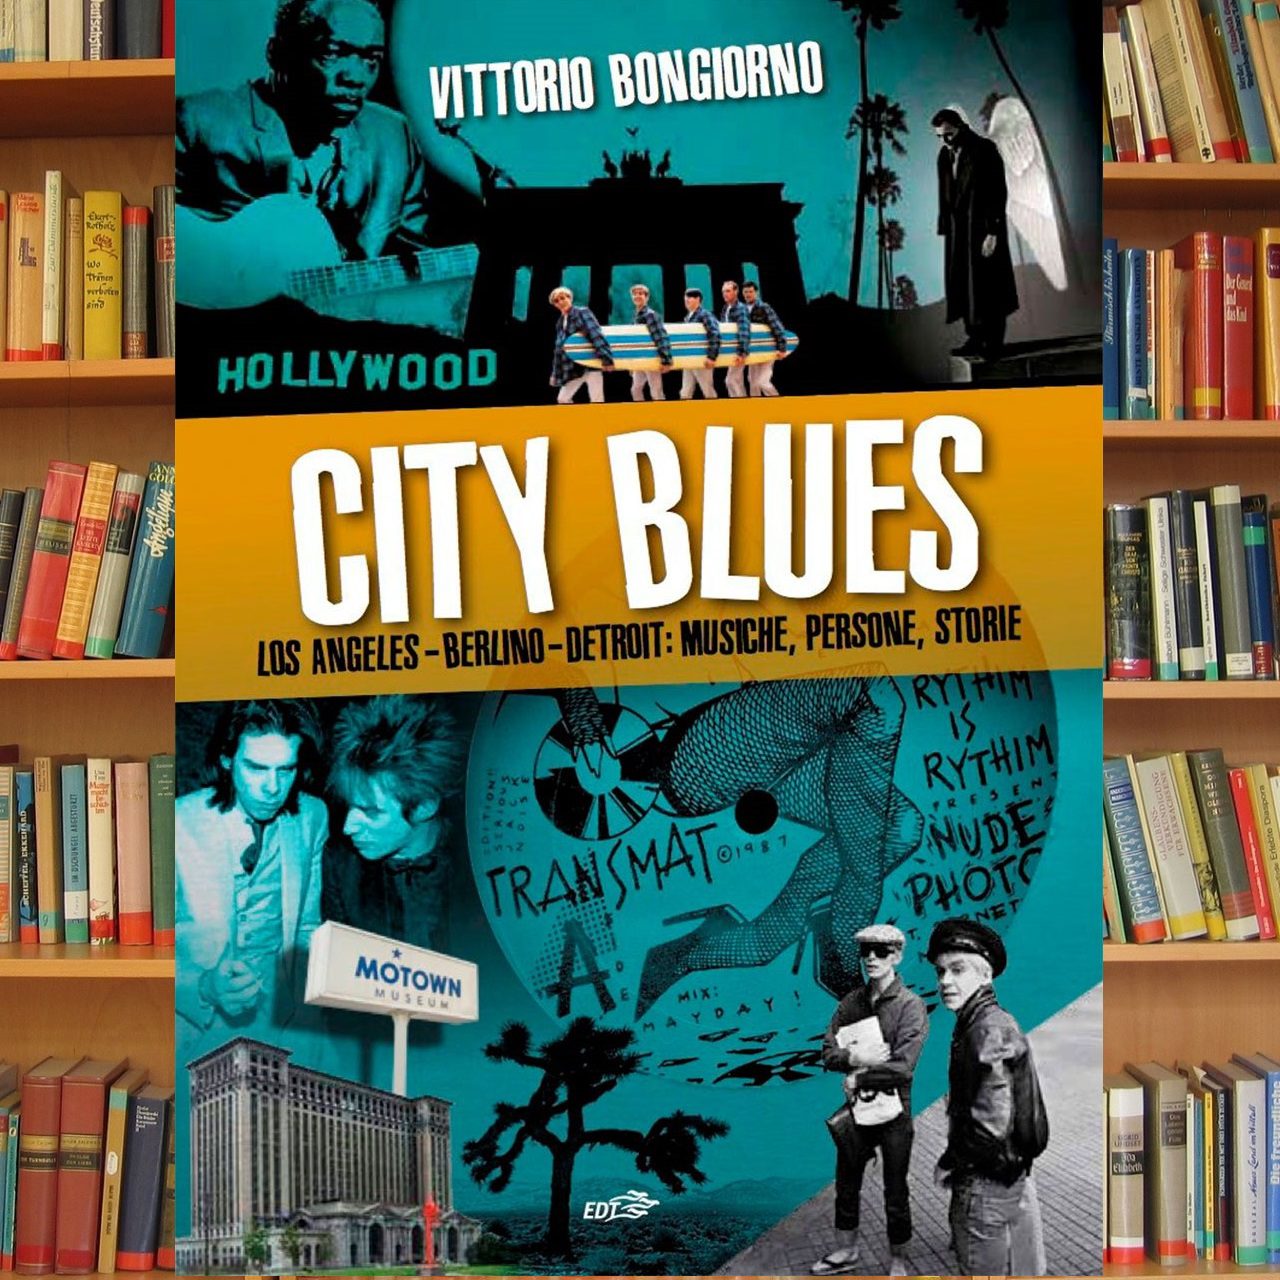 Vittorio Bongiorno - City Blues, Los Angeles, Berlino, Detroit